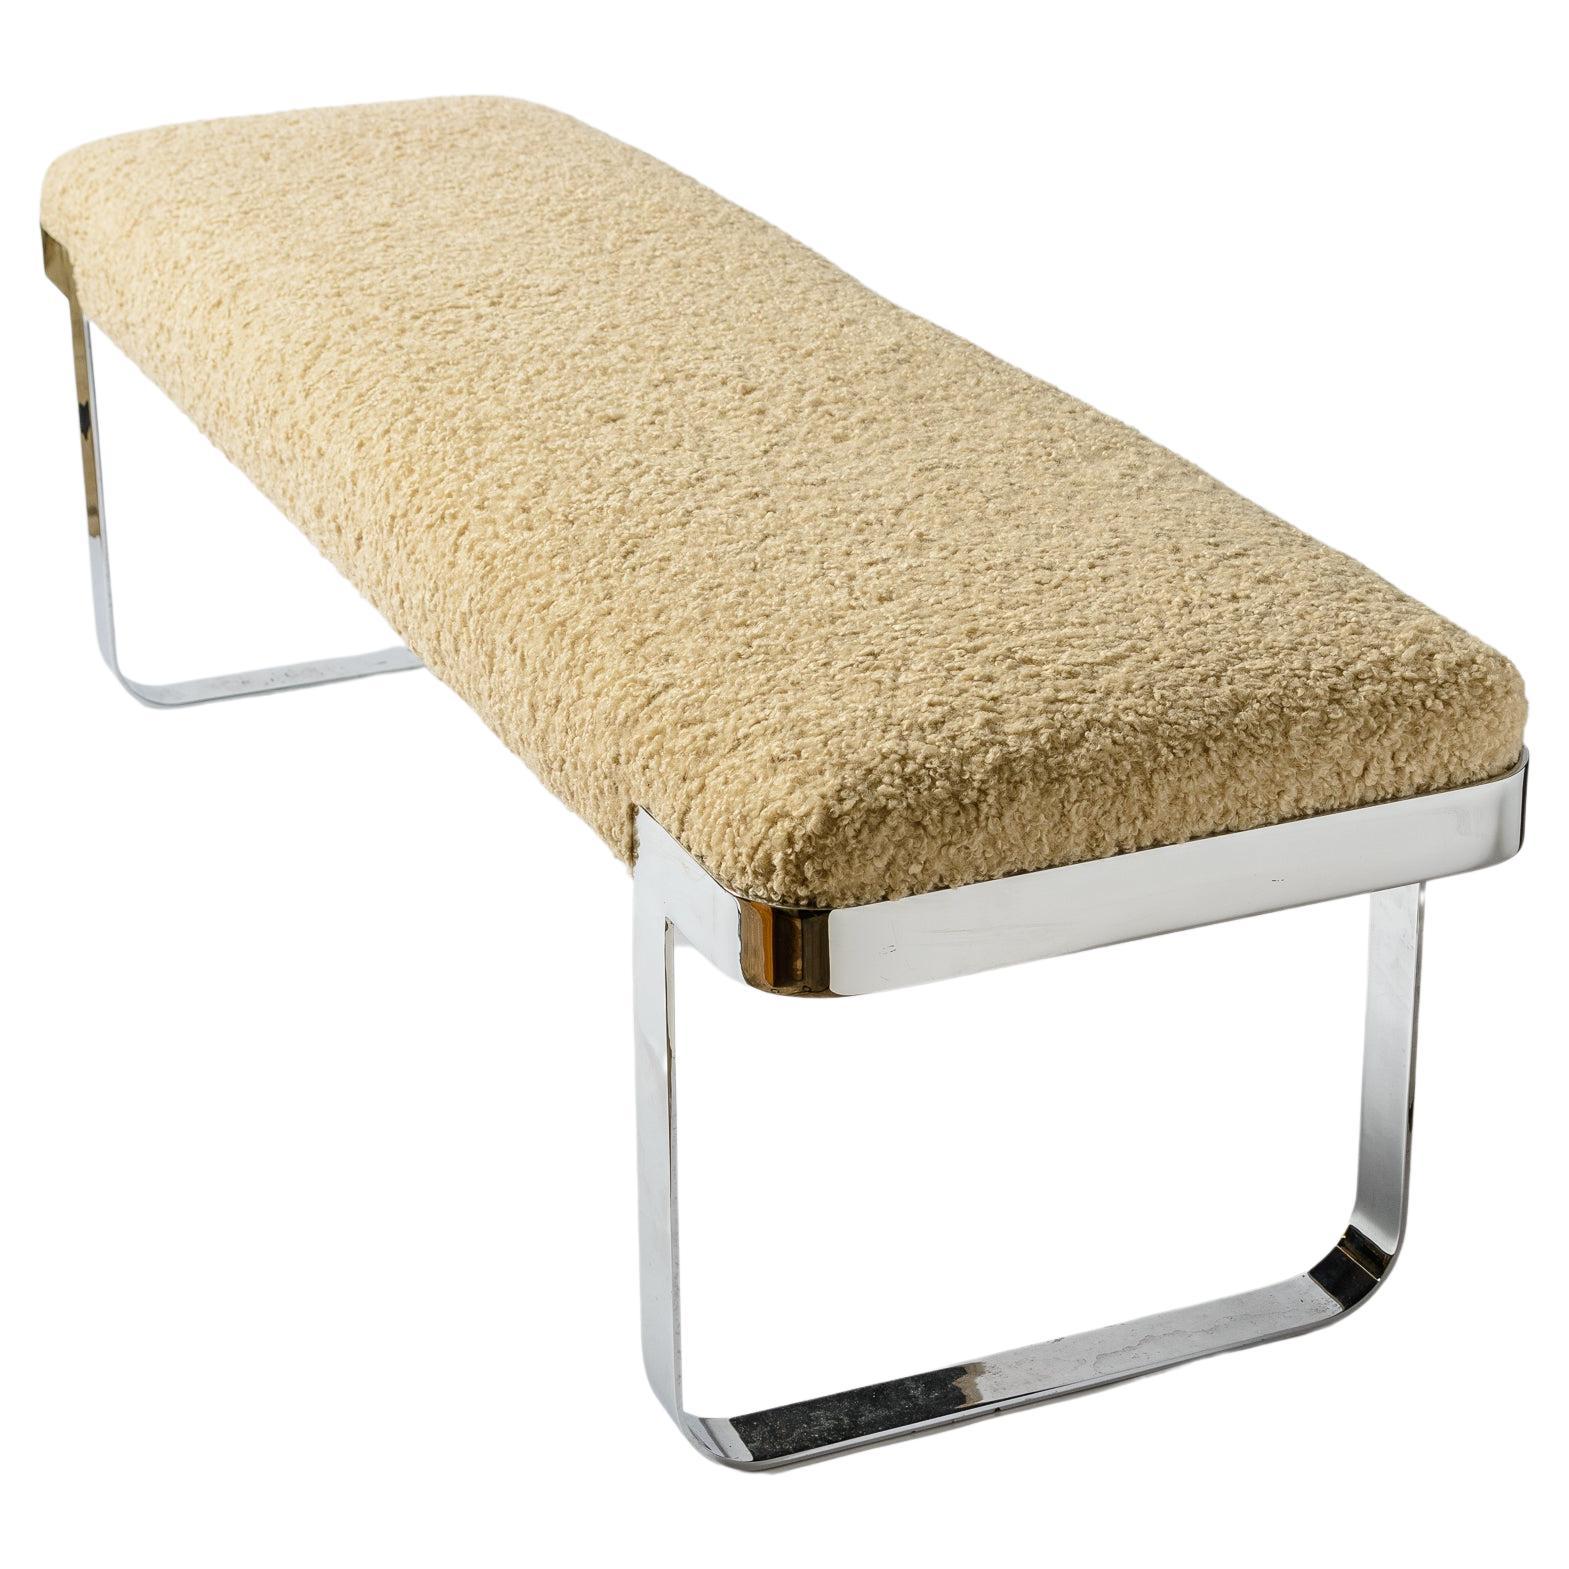 TriMark Upholstered Bench For Sale